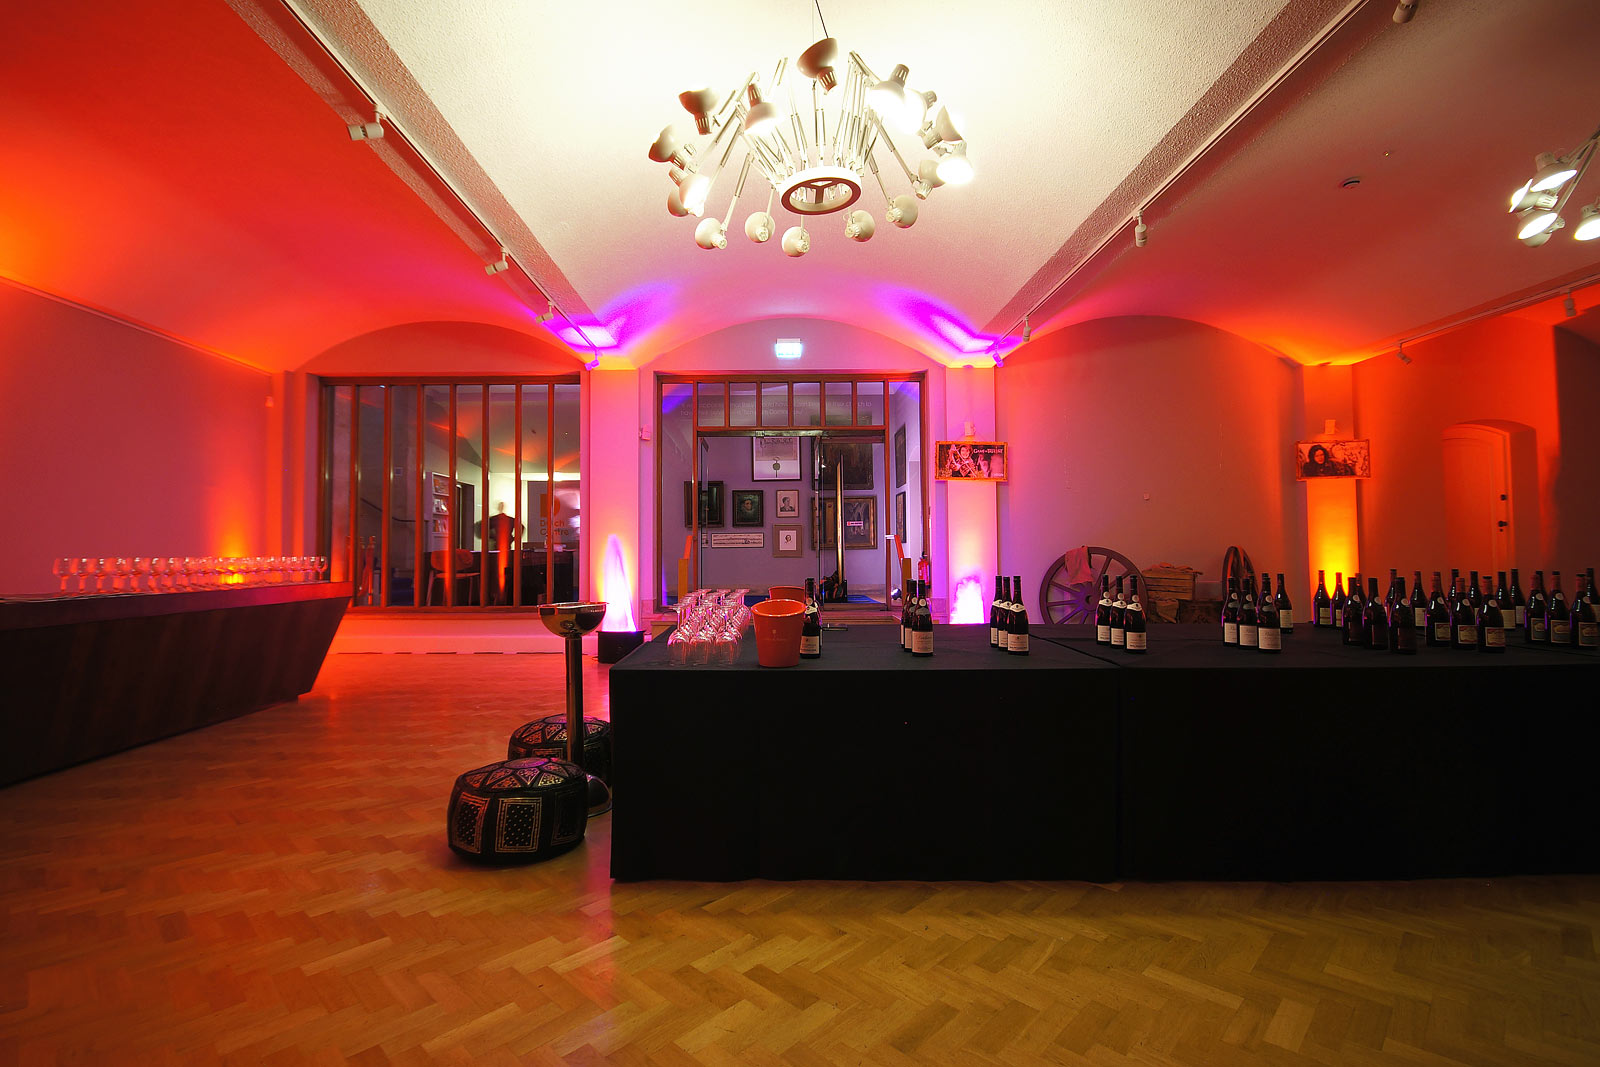 Wine tasting event at London EC2 conference venue The Van Gogh Reception Room